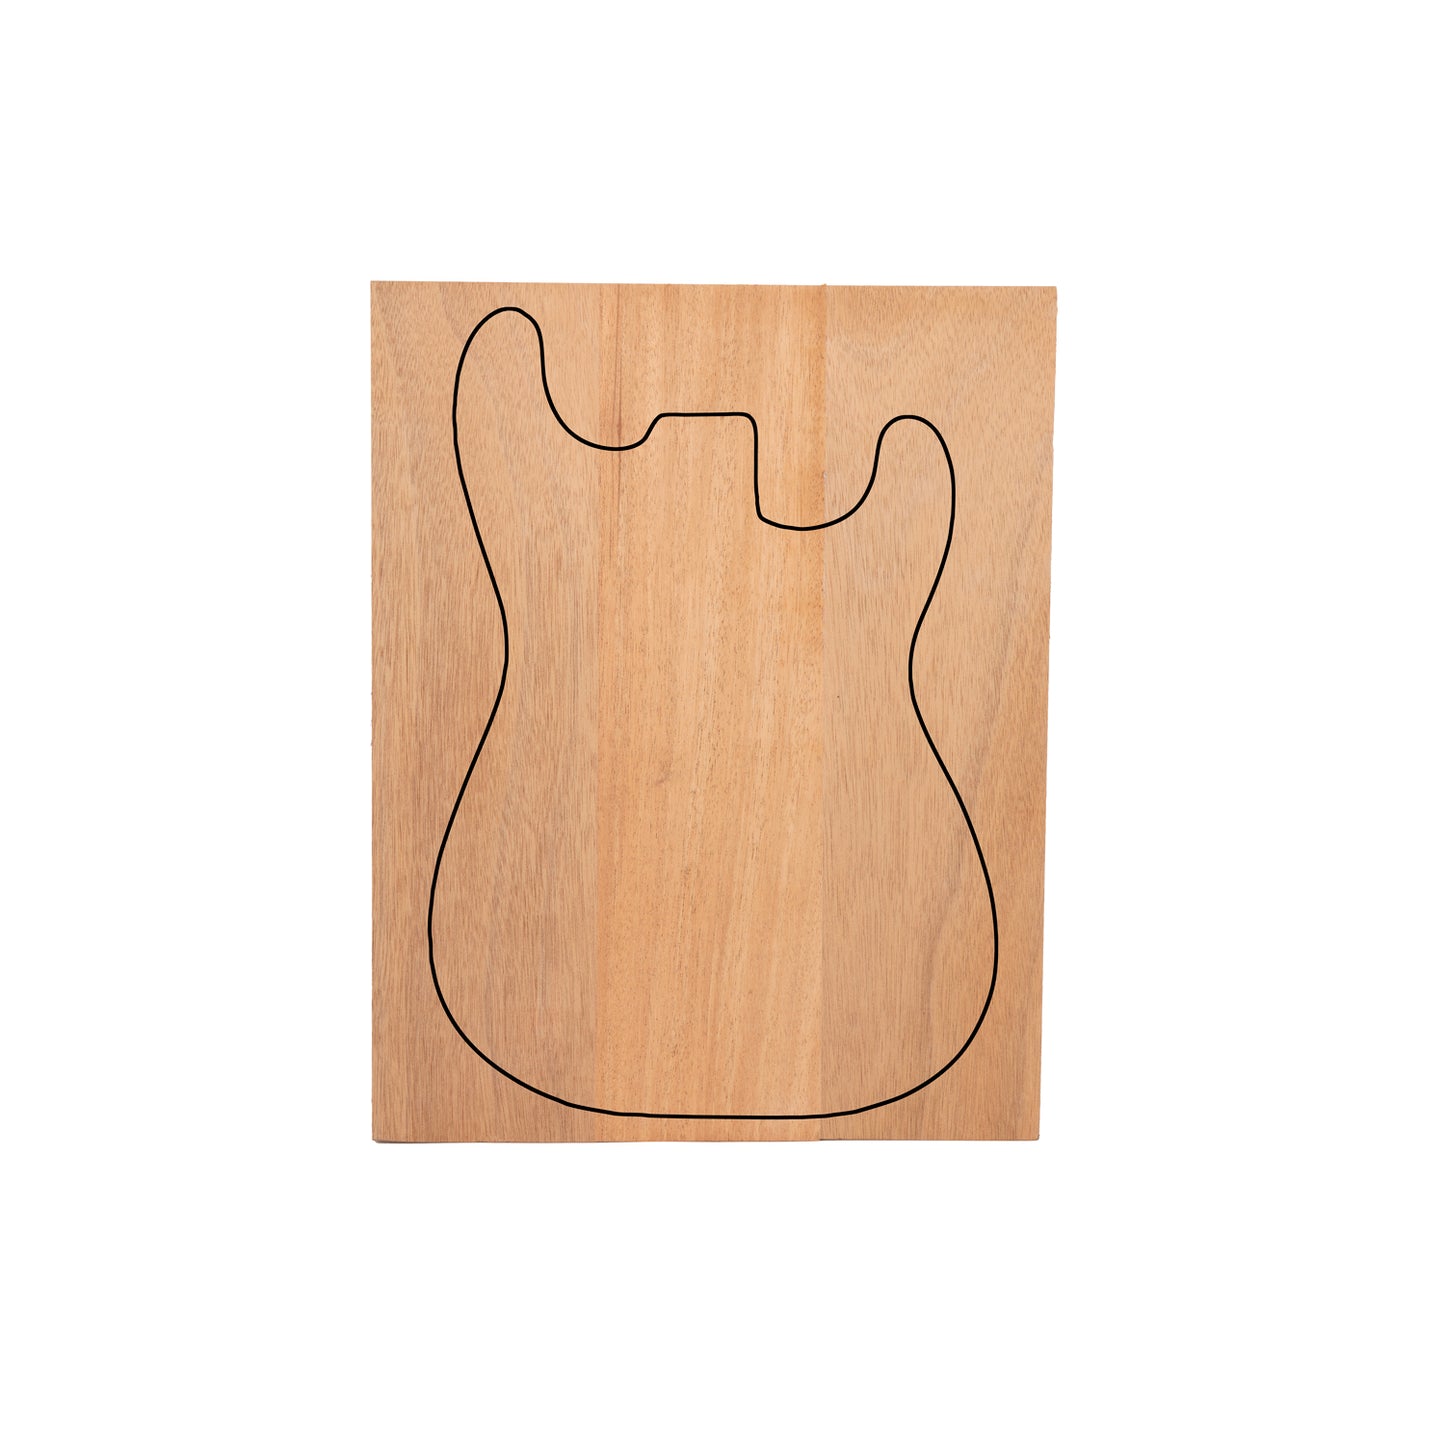 AE Guitars® Premium Mahogany Guitar Body Blank 3 Piece Glued Solid